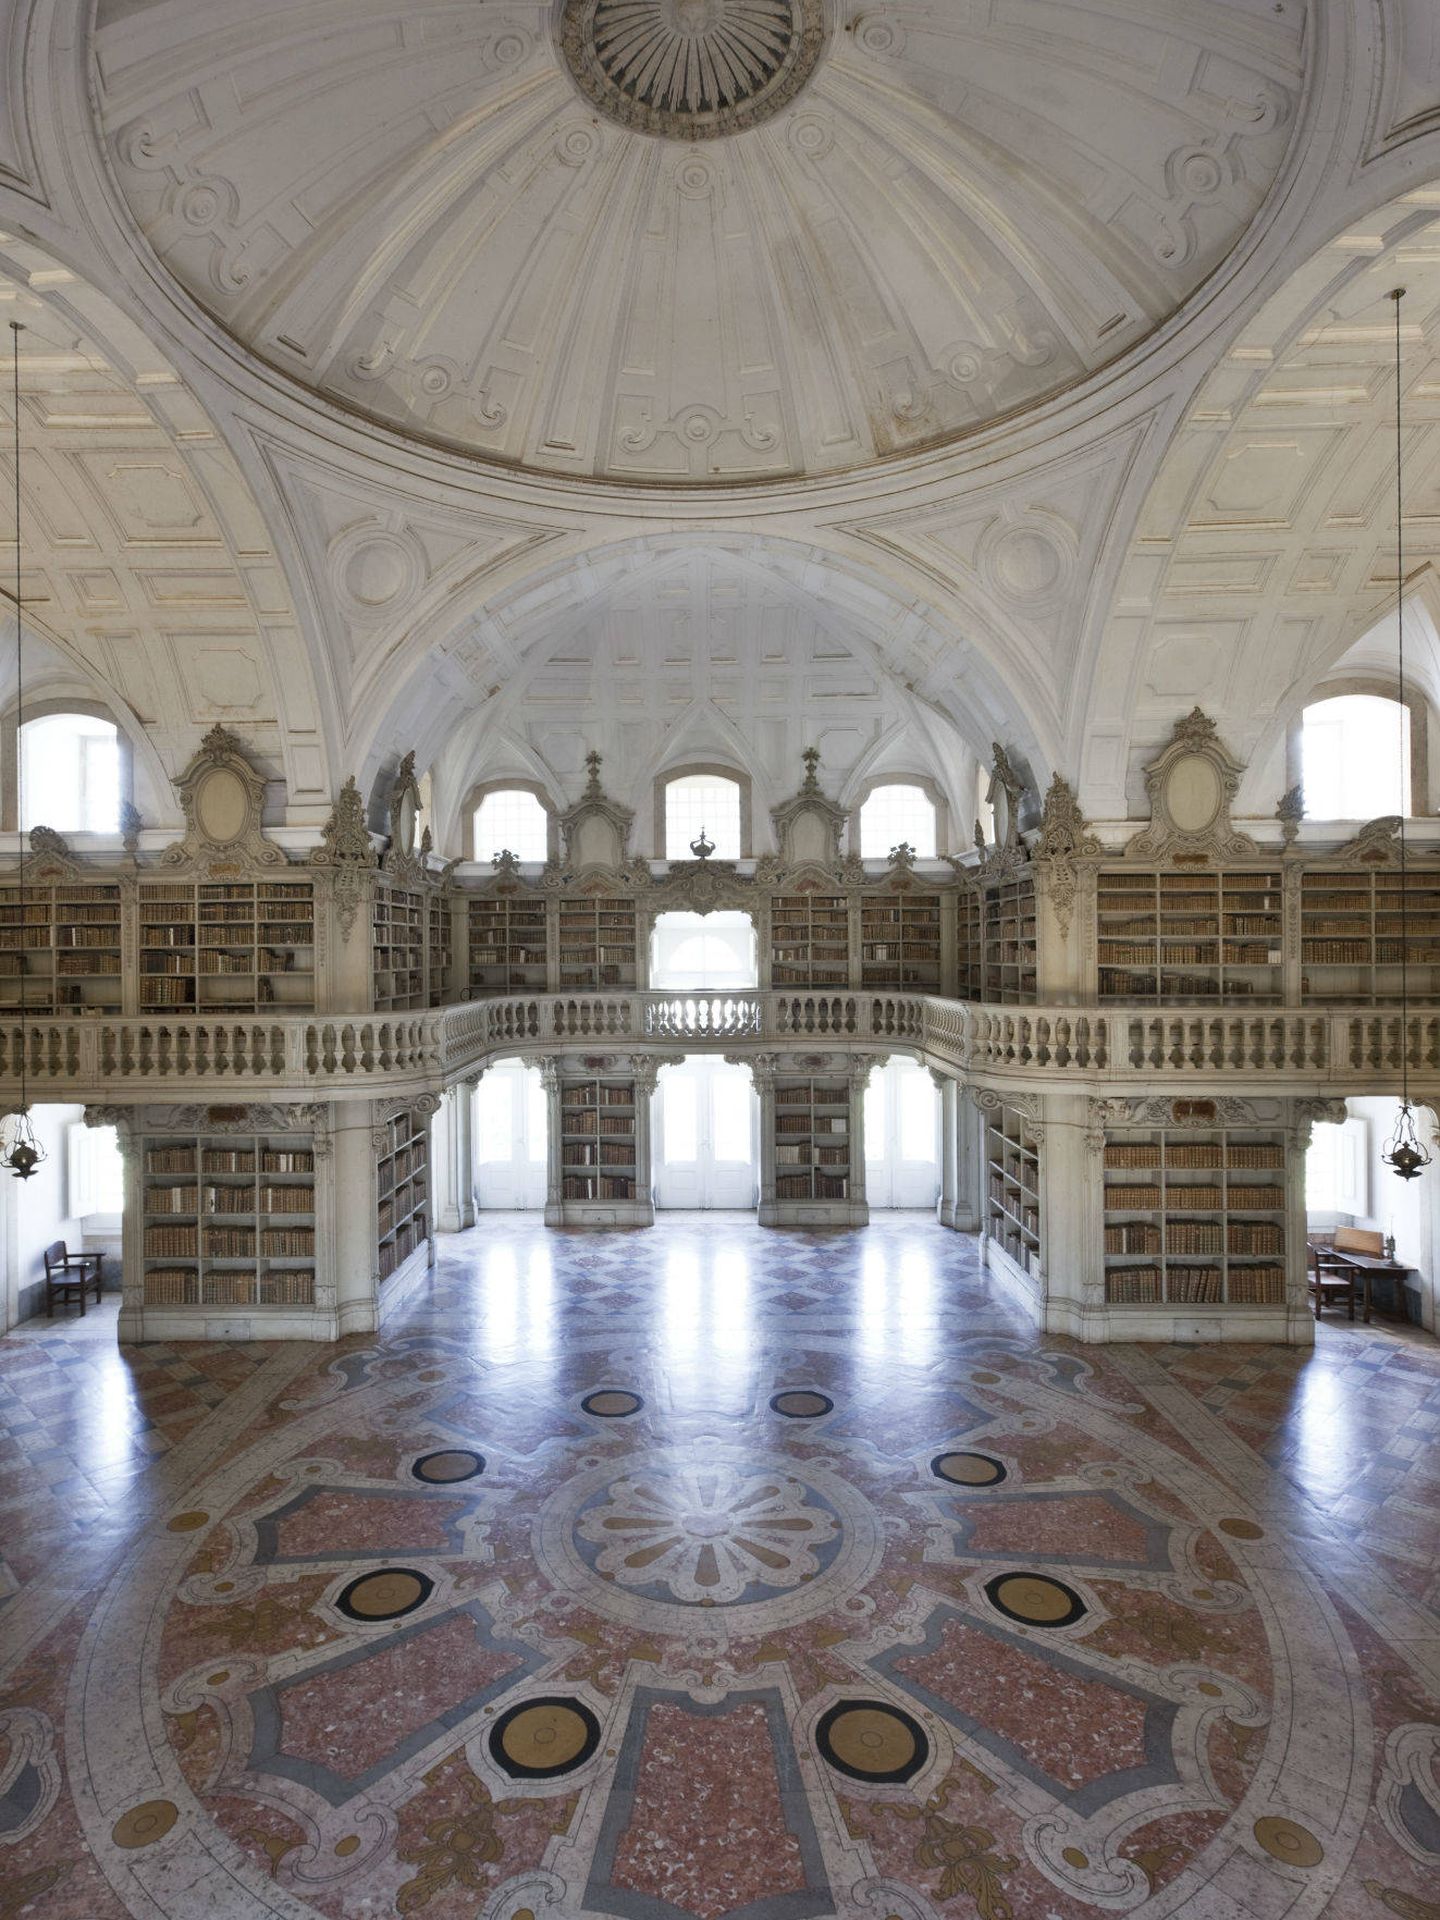  Biblioteca de Tapada. (Luis Ferreira Alves © PNM)